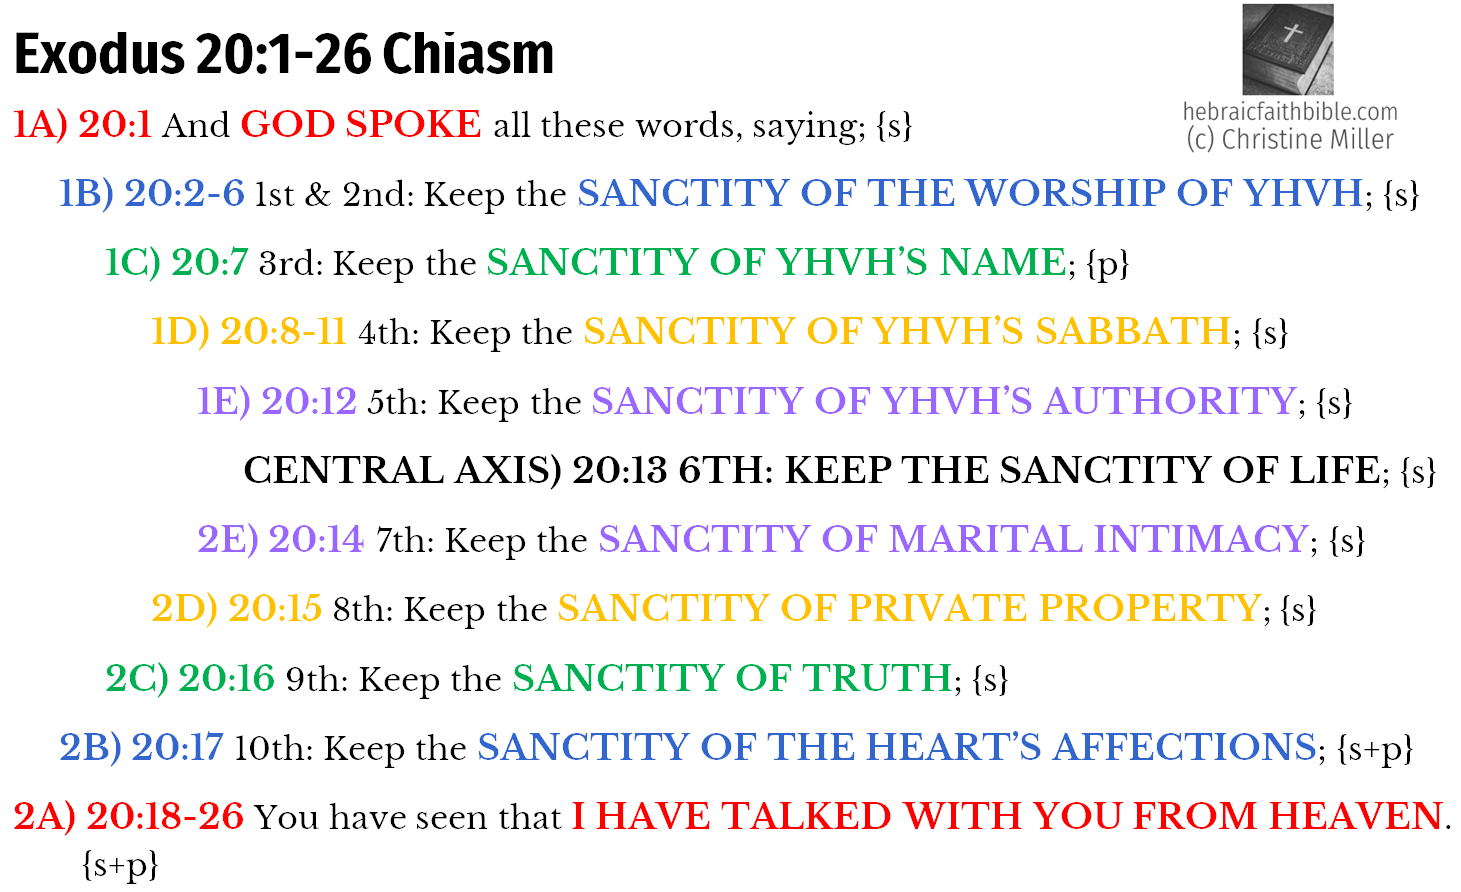 Exo 20:1-16 Chiasm | hebraicfaithbible.com